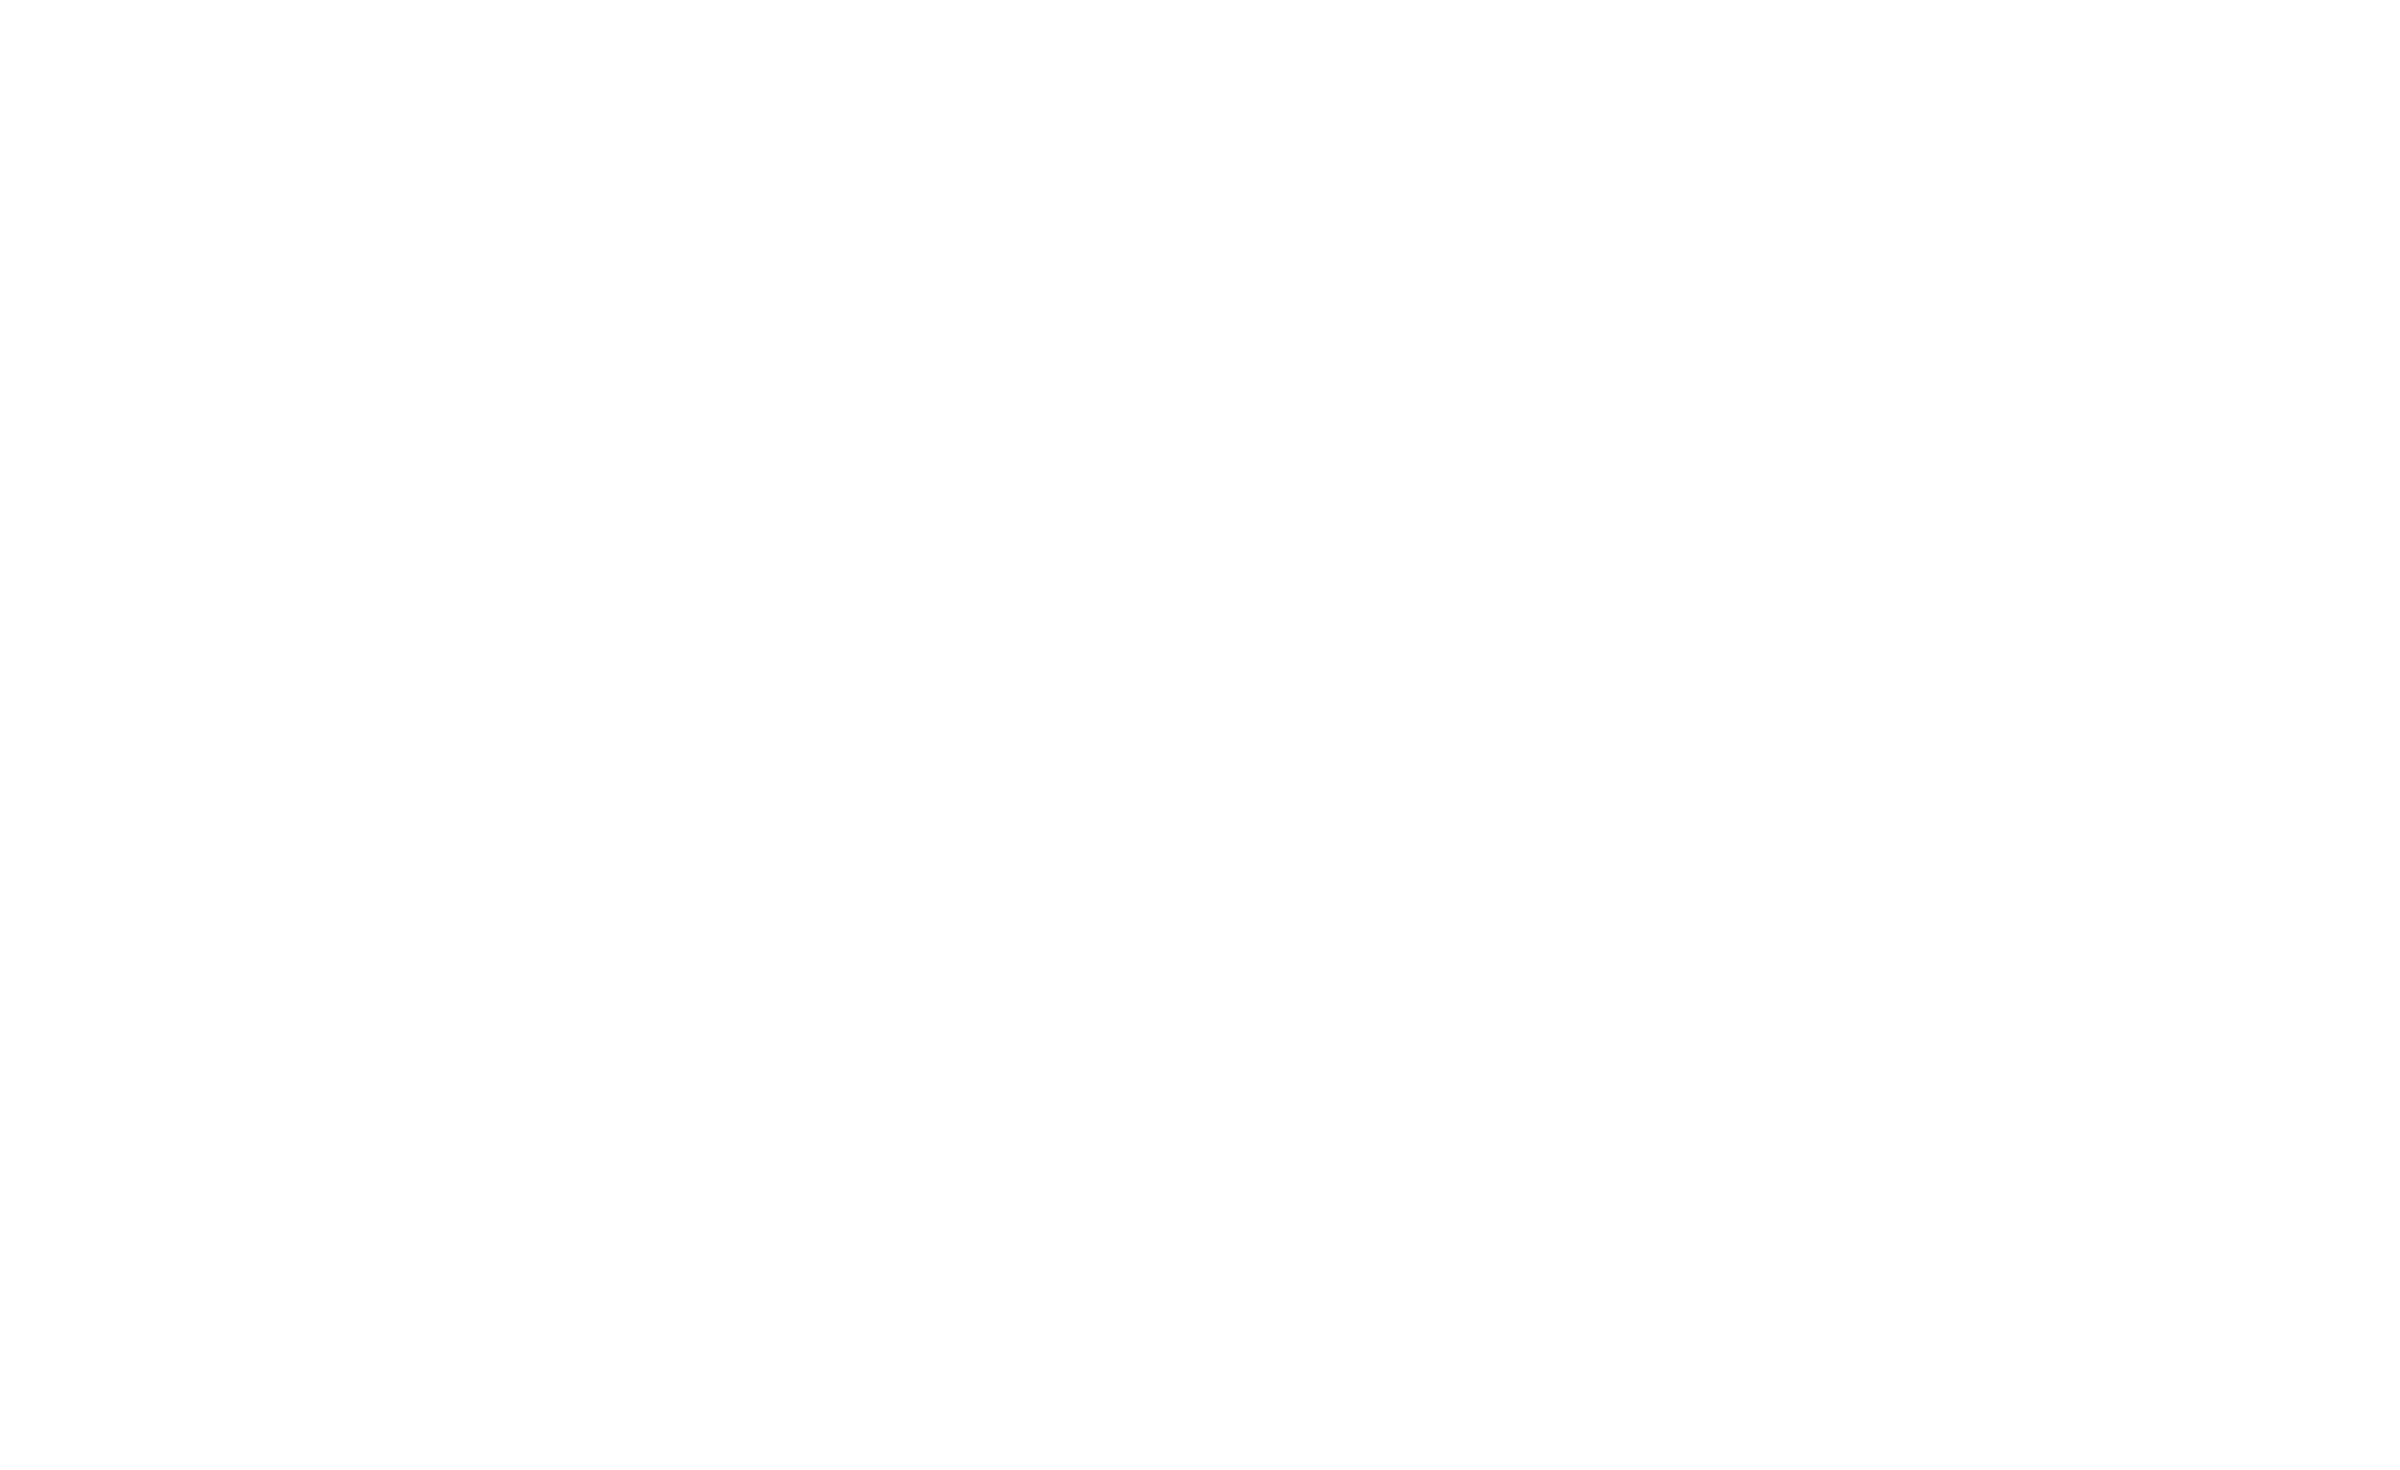 wayne dalton logo